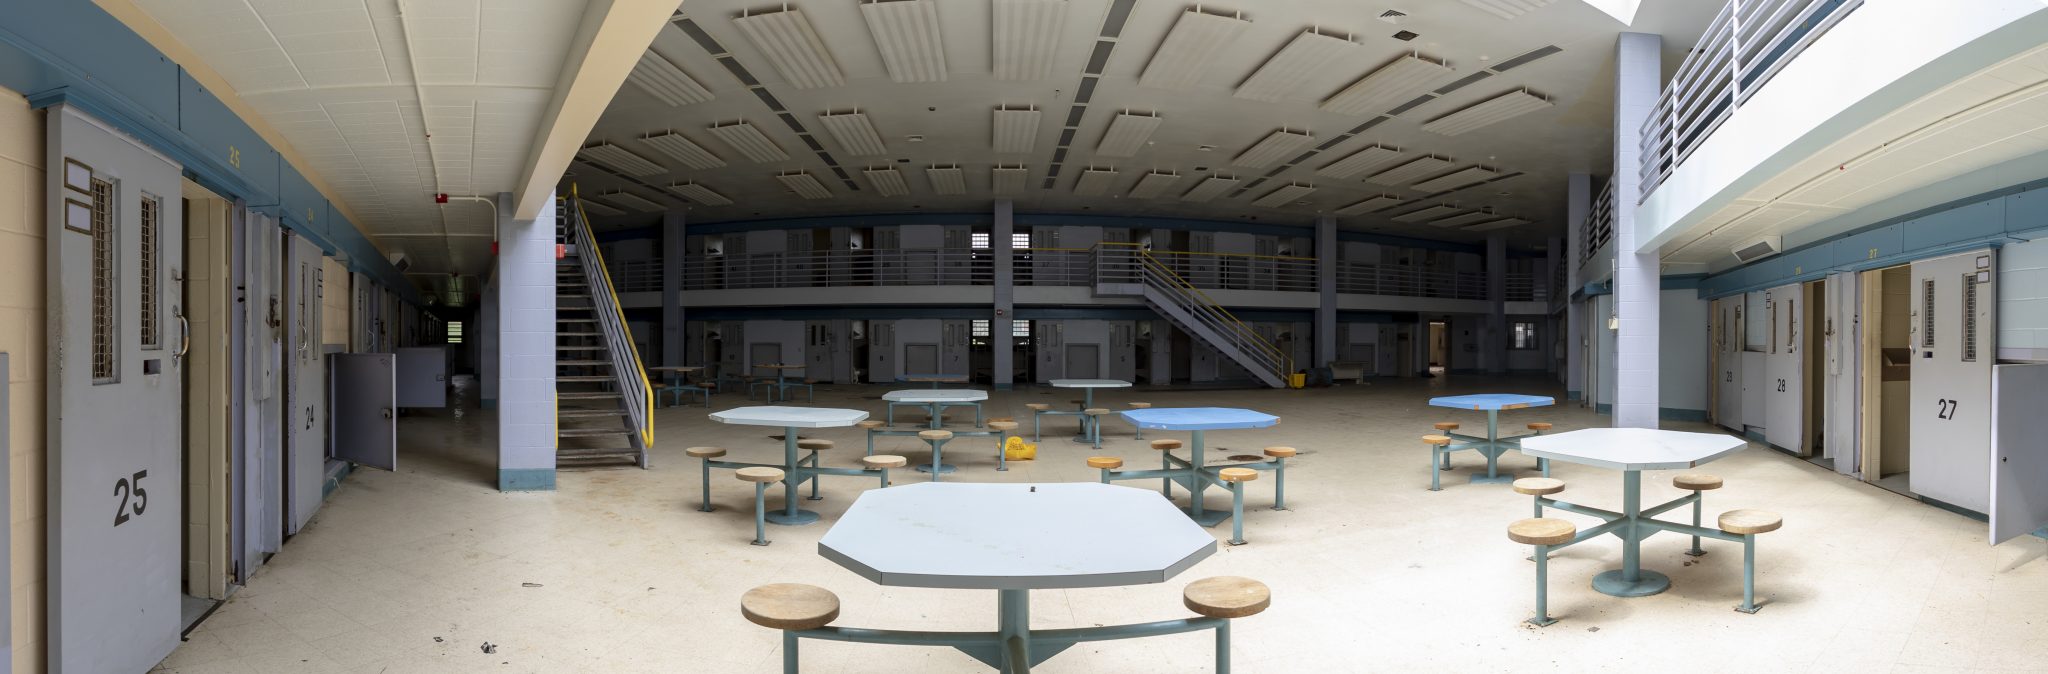 Pitchess Detention Center East Facility Roshanian & Associates